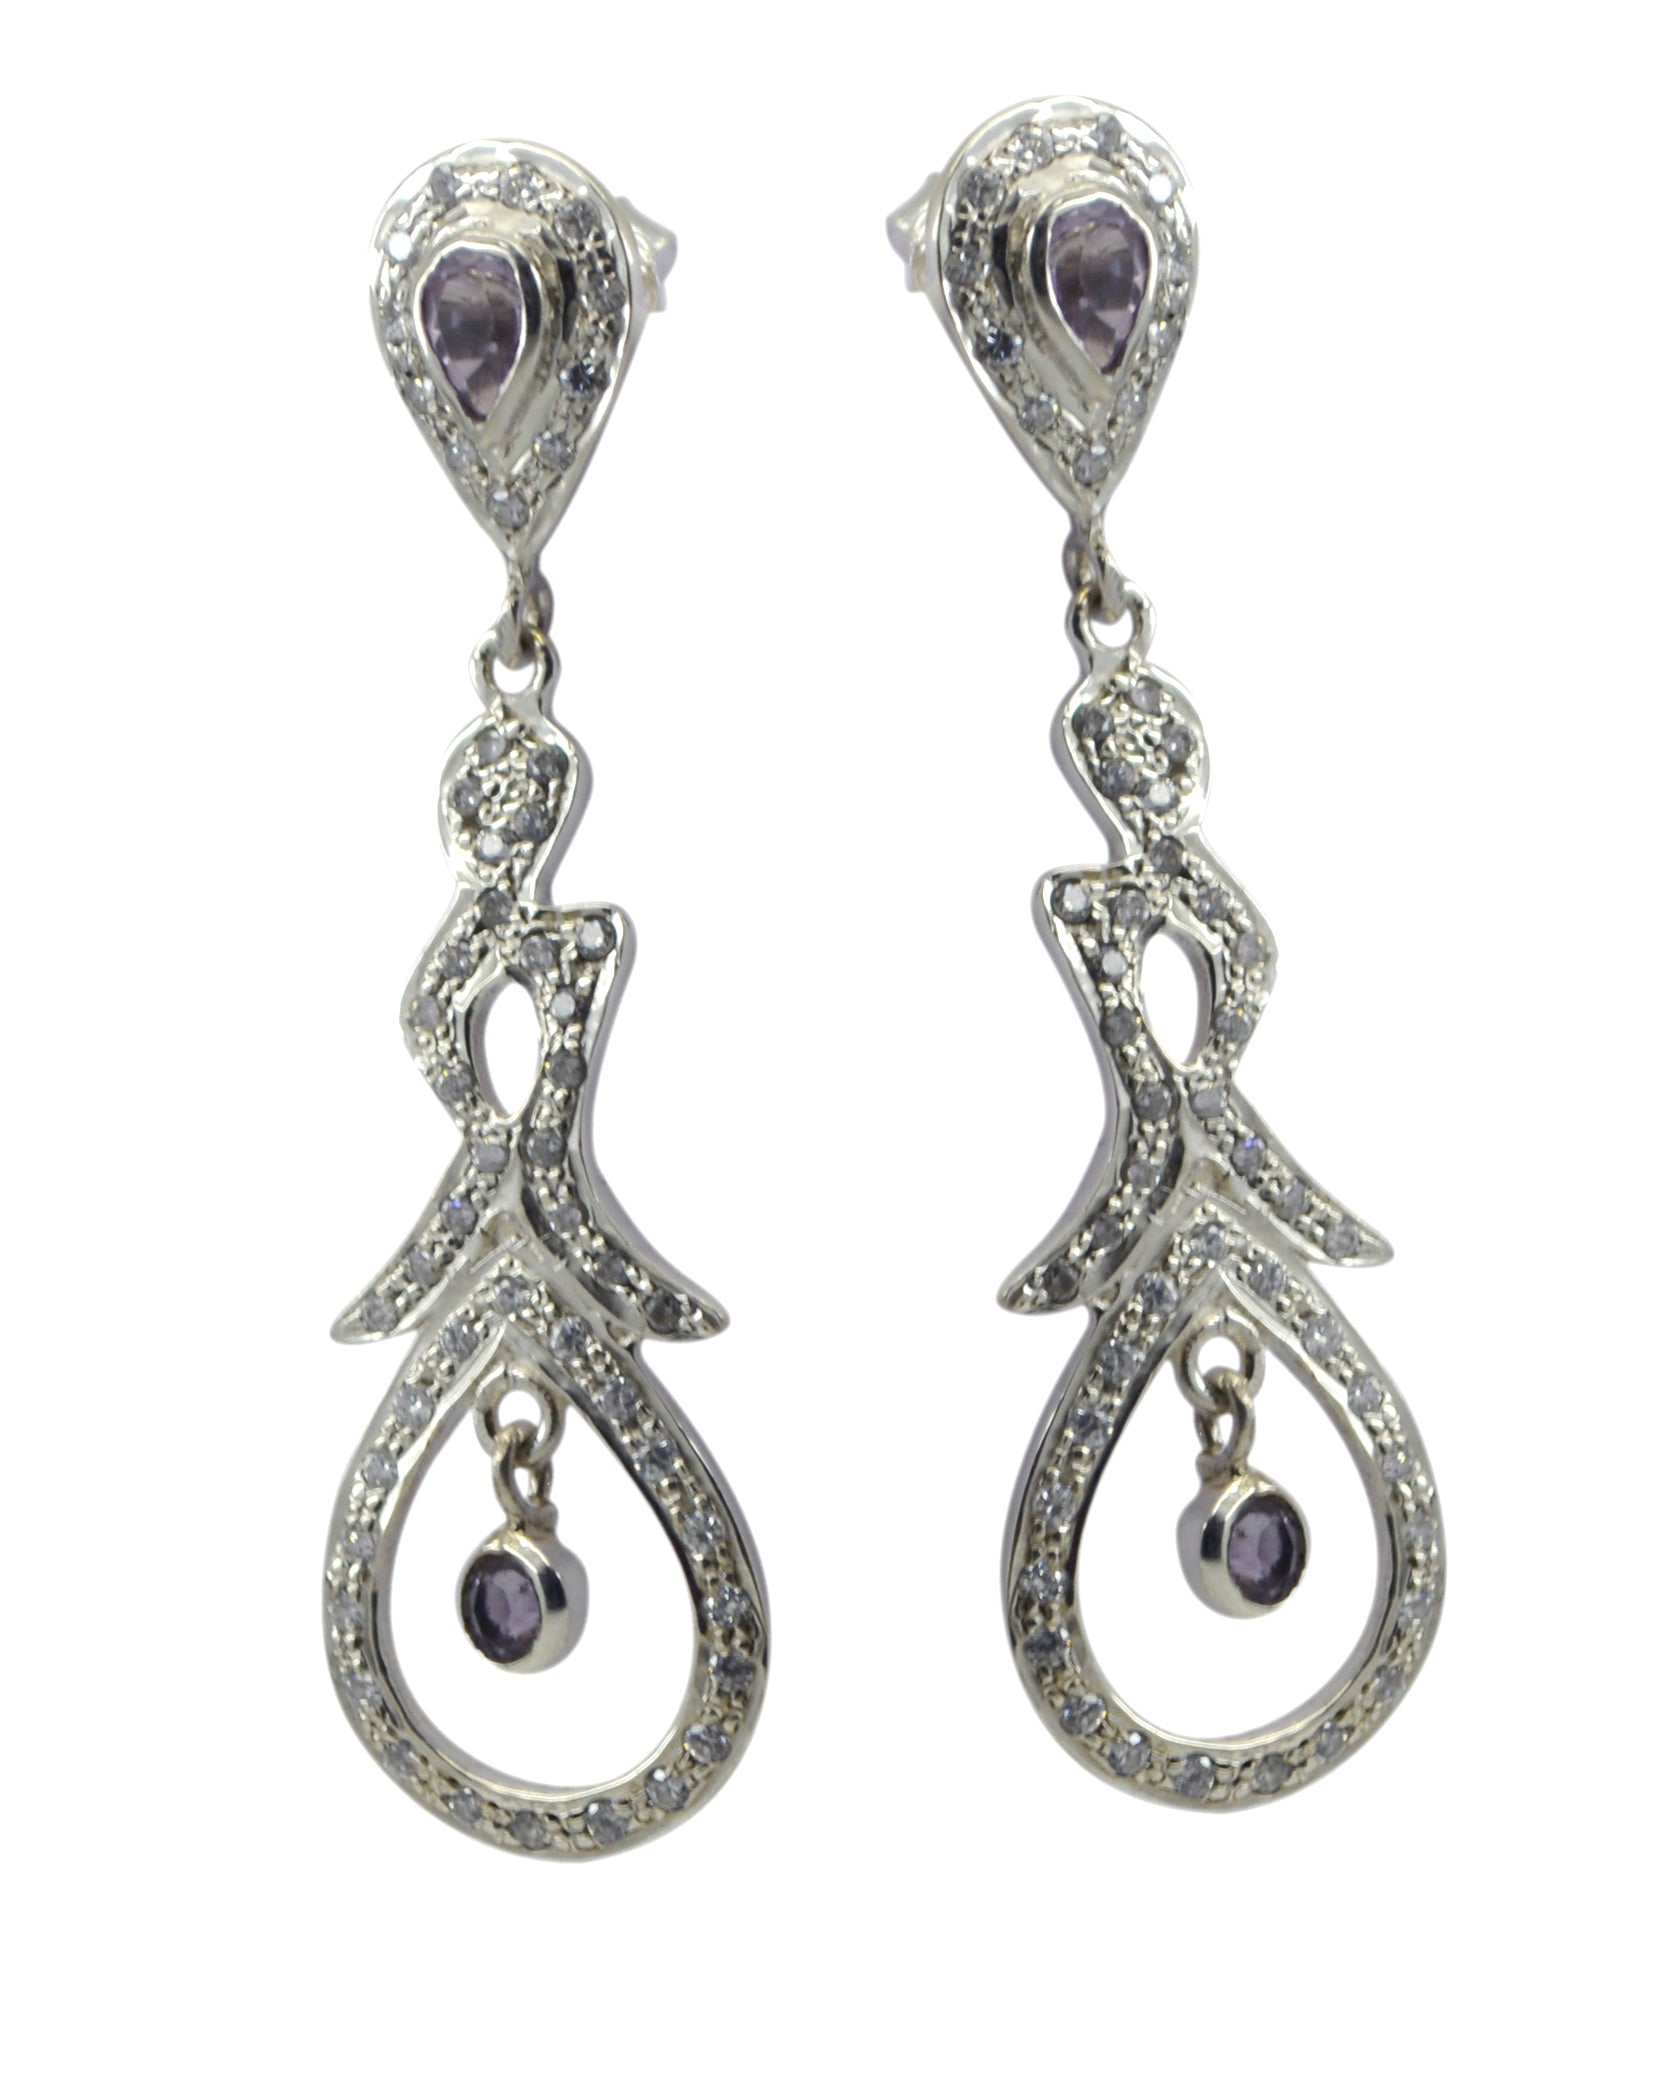 Riyo Nice Gemstone multi shape Faceted Purple Amethyst Silver Earrings gift for wife